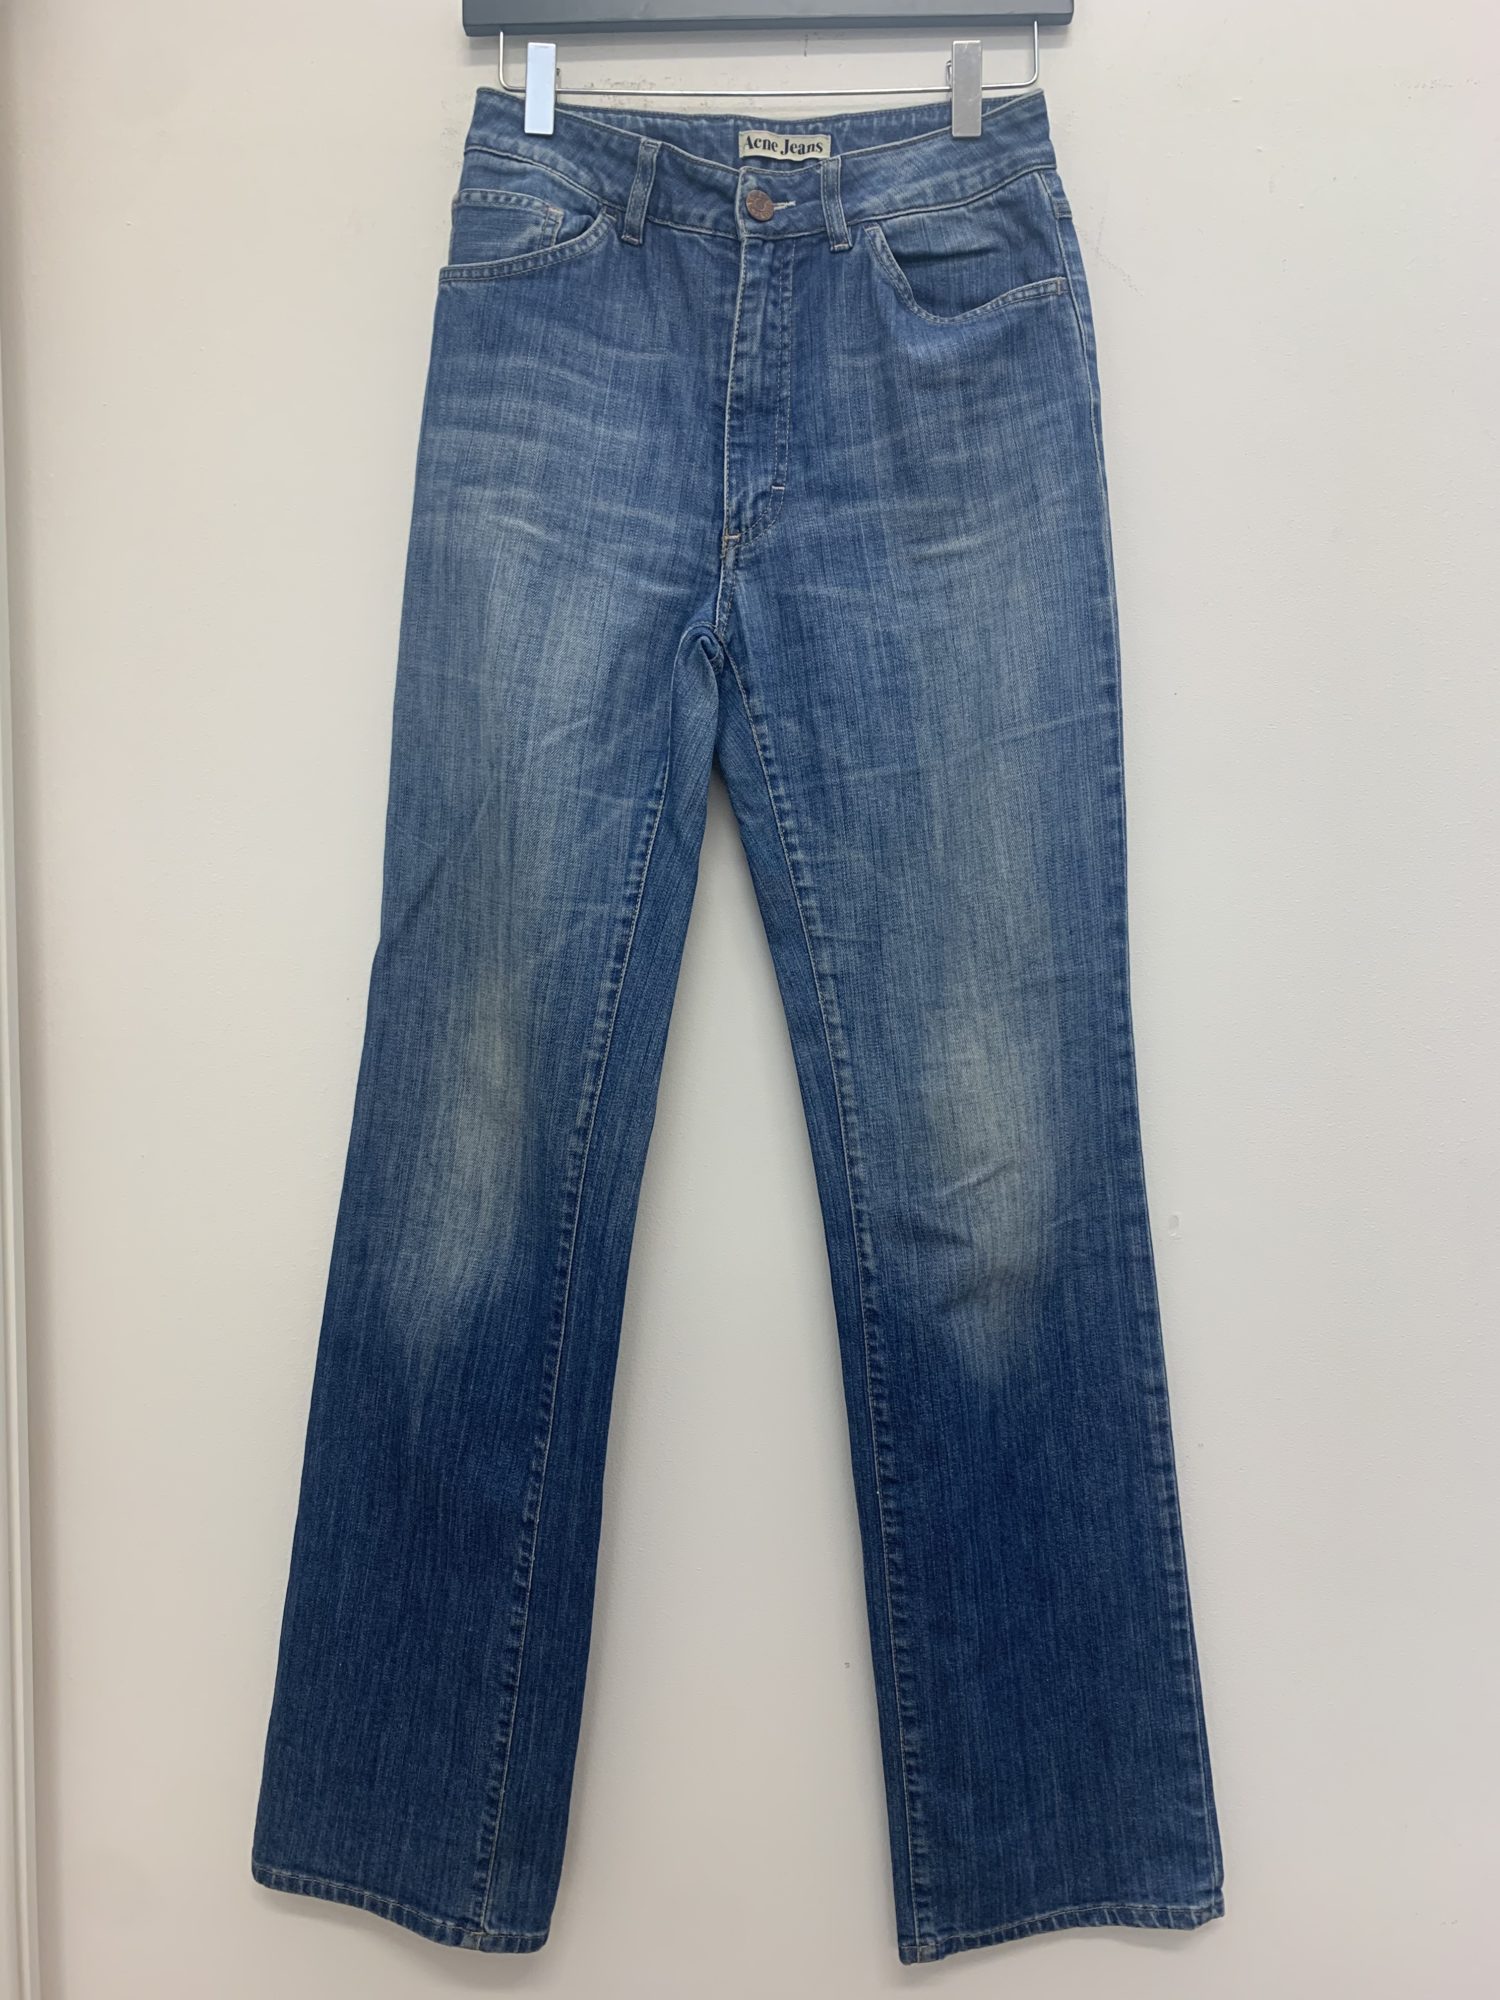 Acne Studio Blue Jeans – StyleSwap